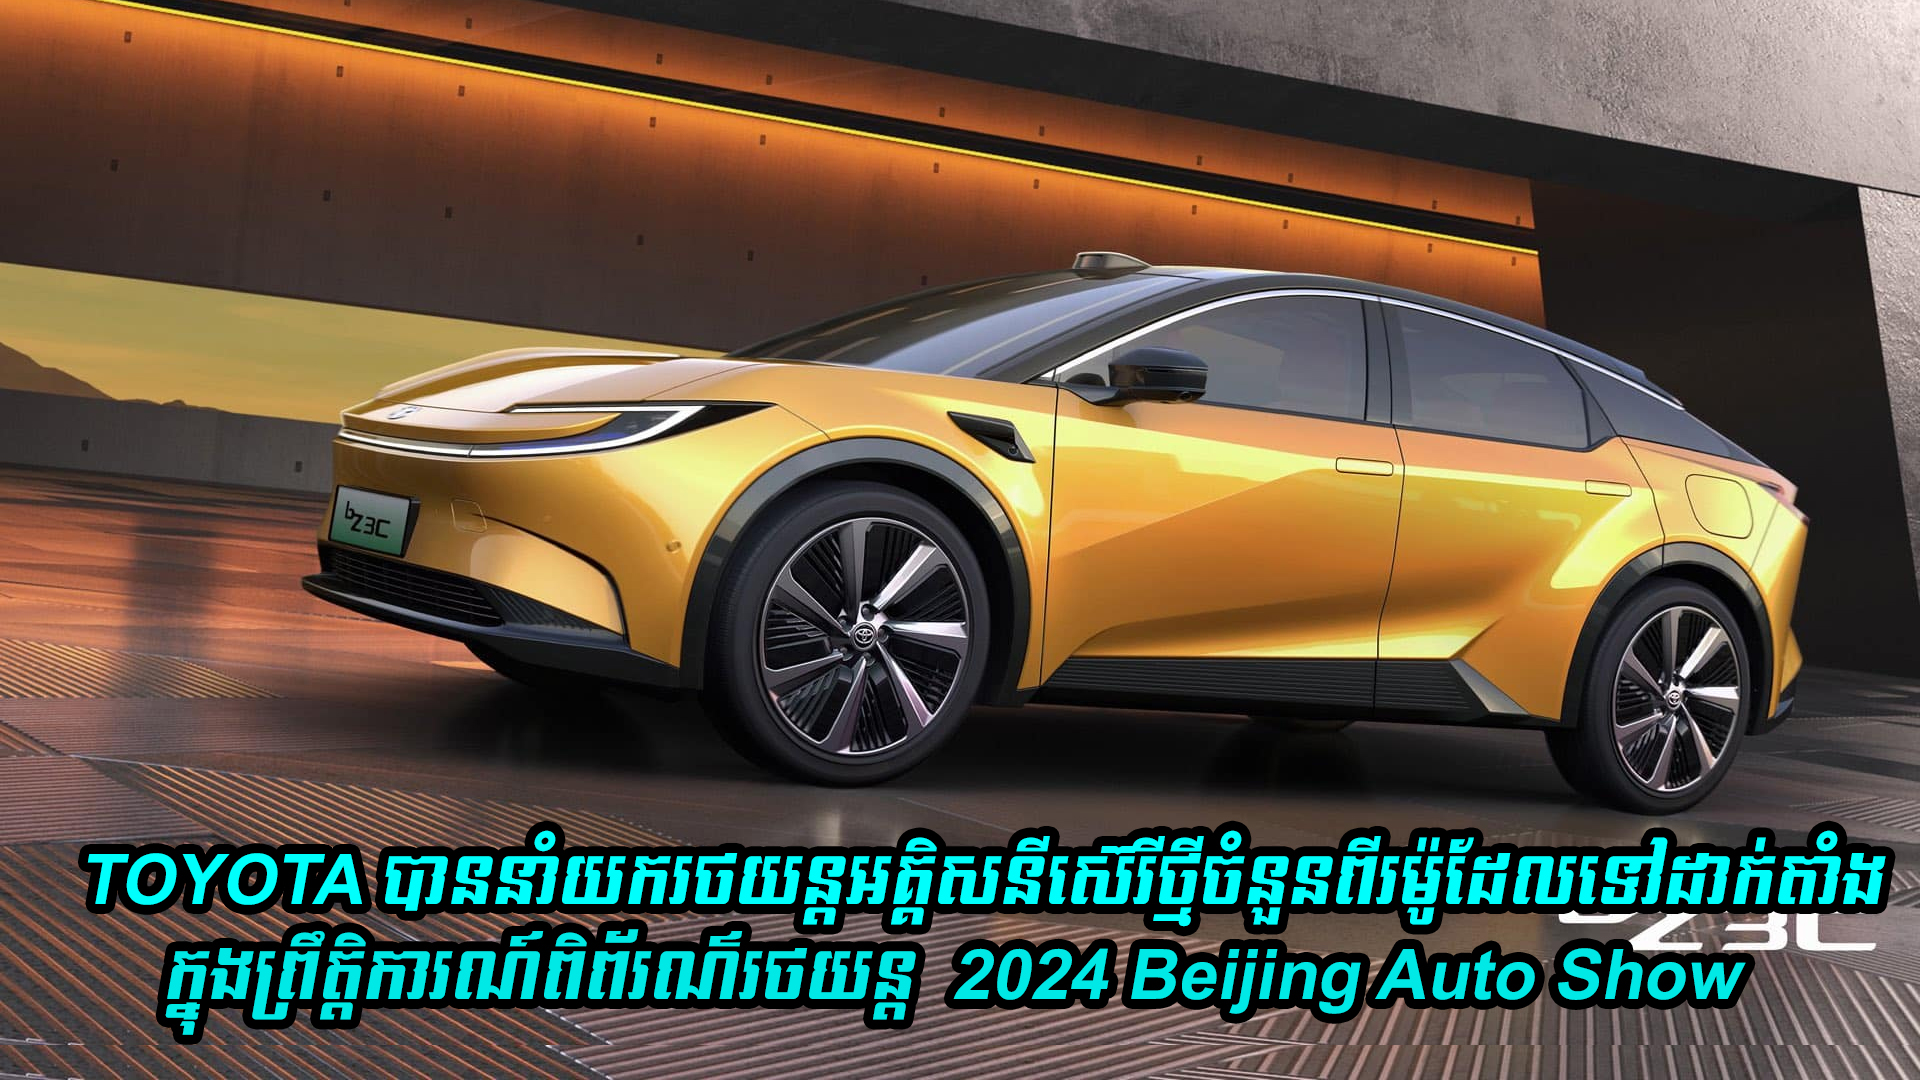 TOYOTA បាននាំយករថយន្តអគ្គិសនីស៊េរីថ្មីចំនួនពីរម៉ូដែល ទៅដាក់តាំងបង្ហាញក្នុងព្រឹត្តិការណ៍ពិព័រណ៌រថយន្ត Beijing Auto Show 2024 